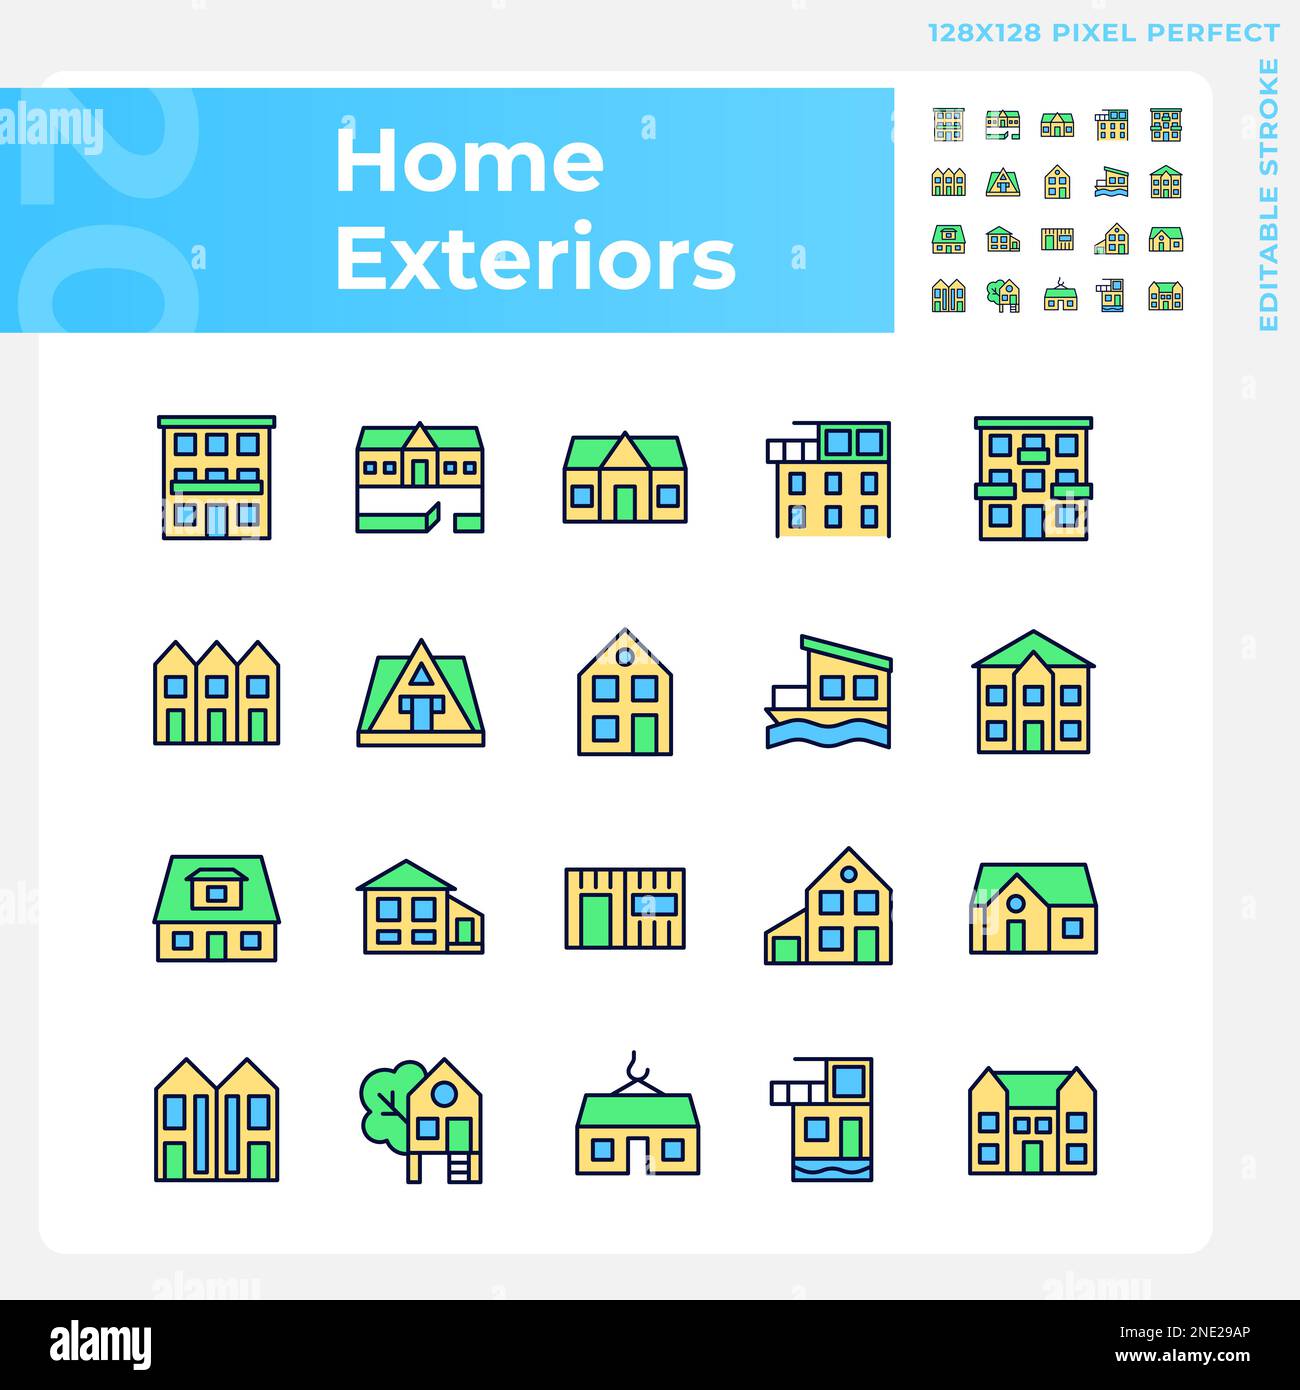 Home Exteriors Pixel Perfect RGB-Farbsymbole Stock Vektor